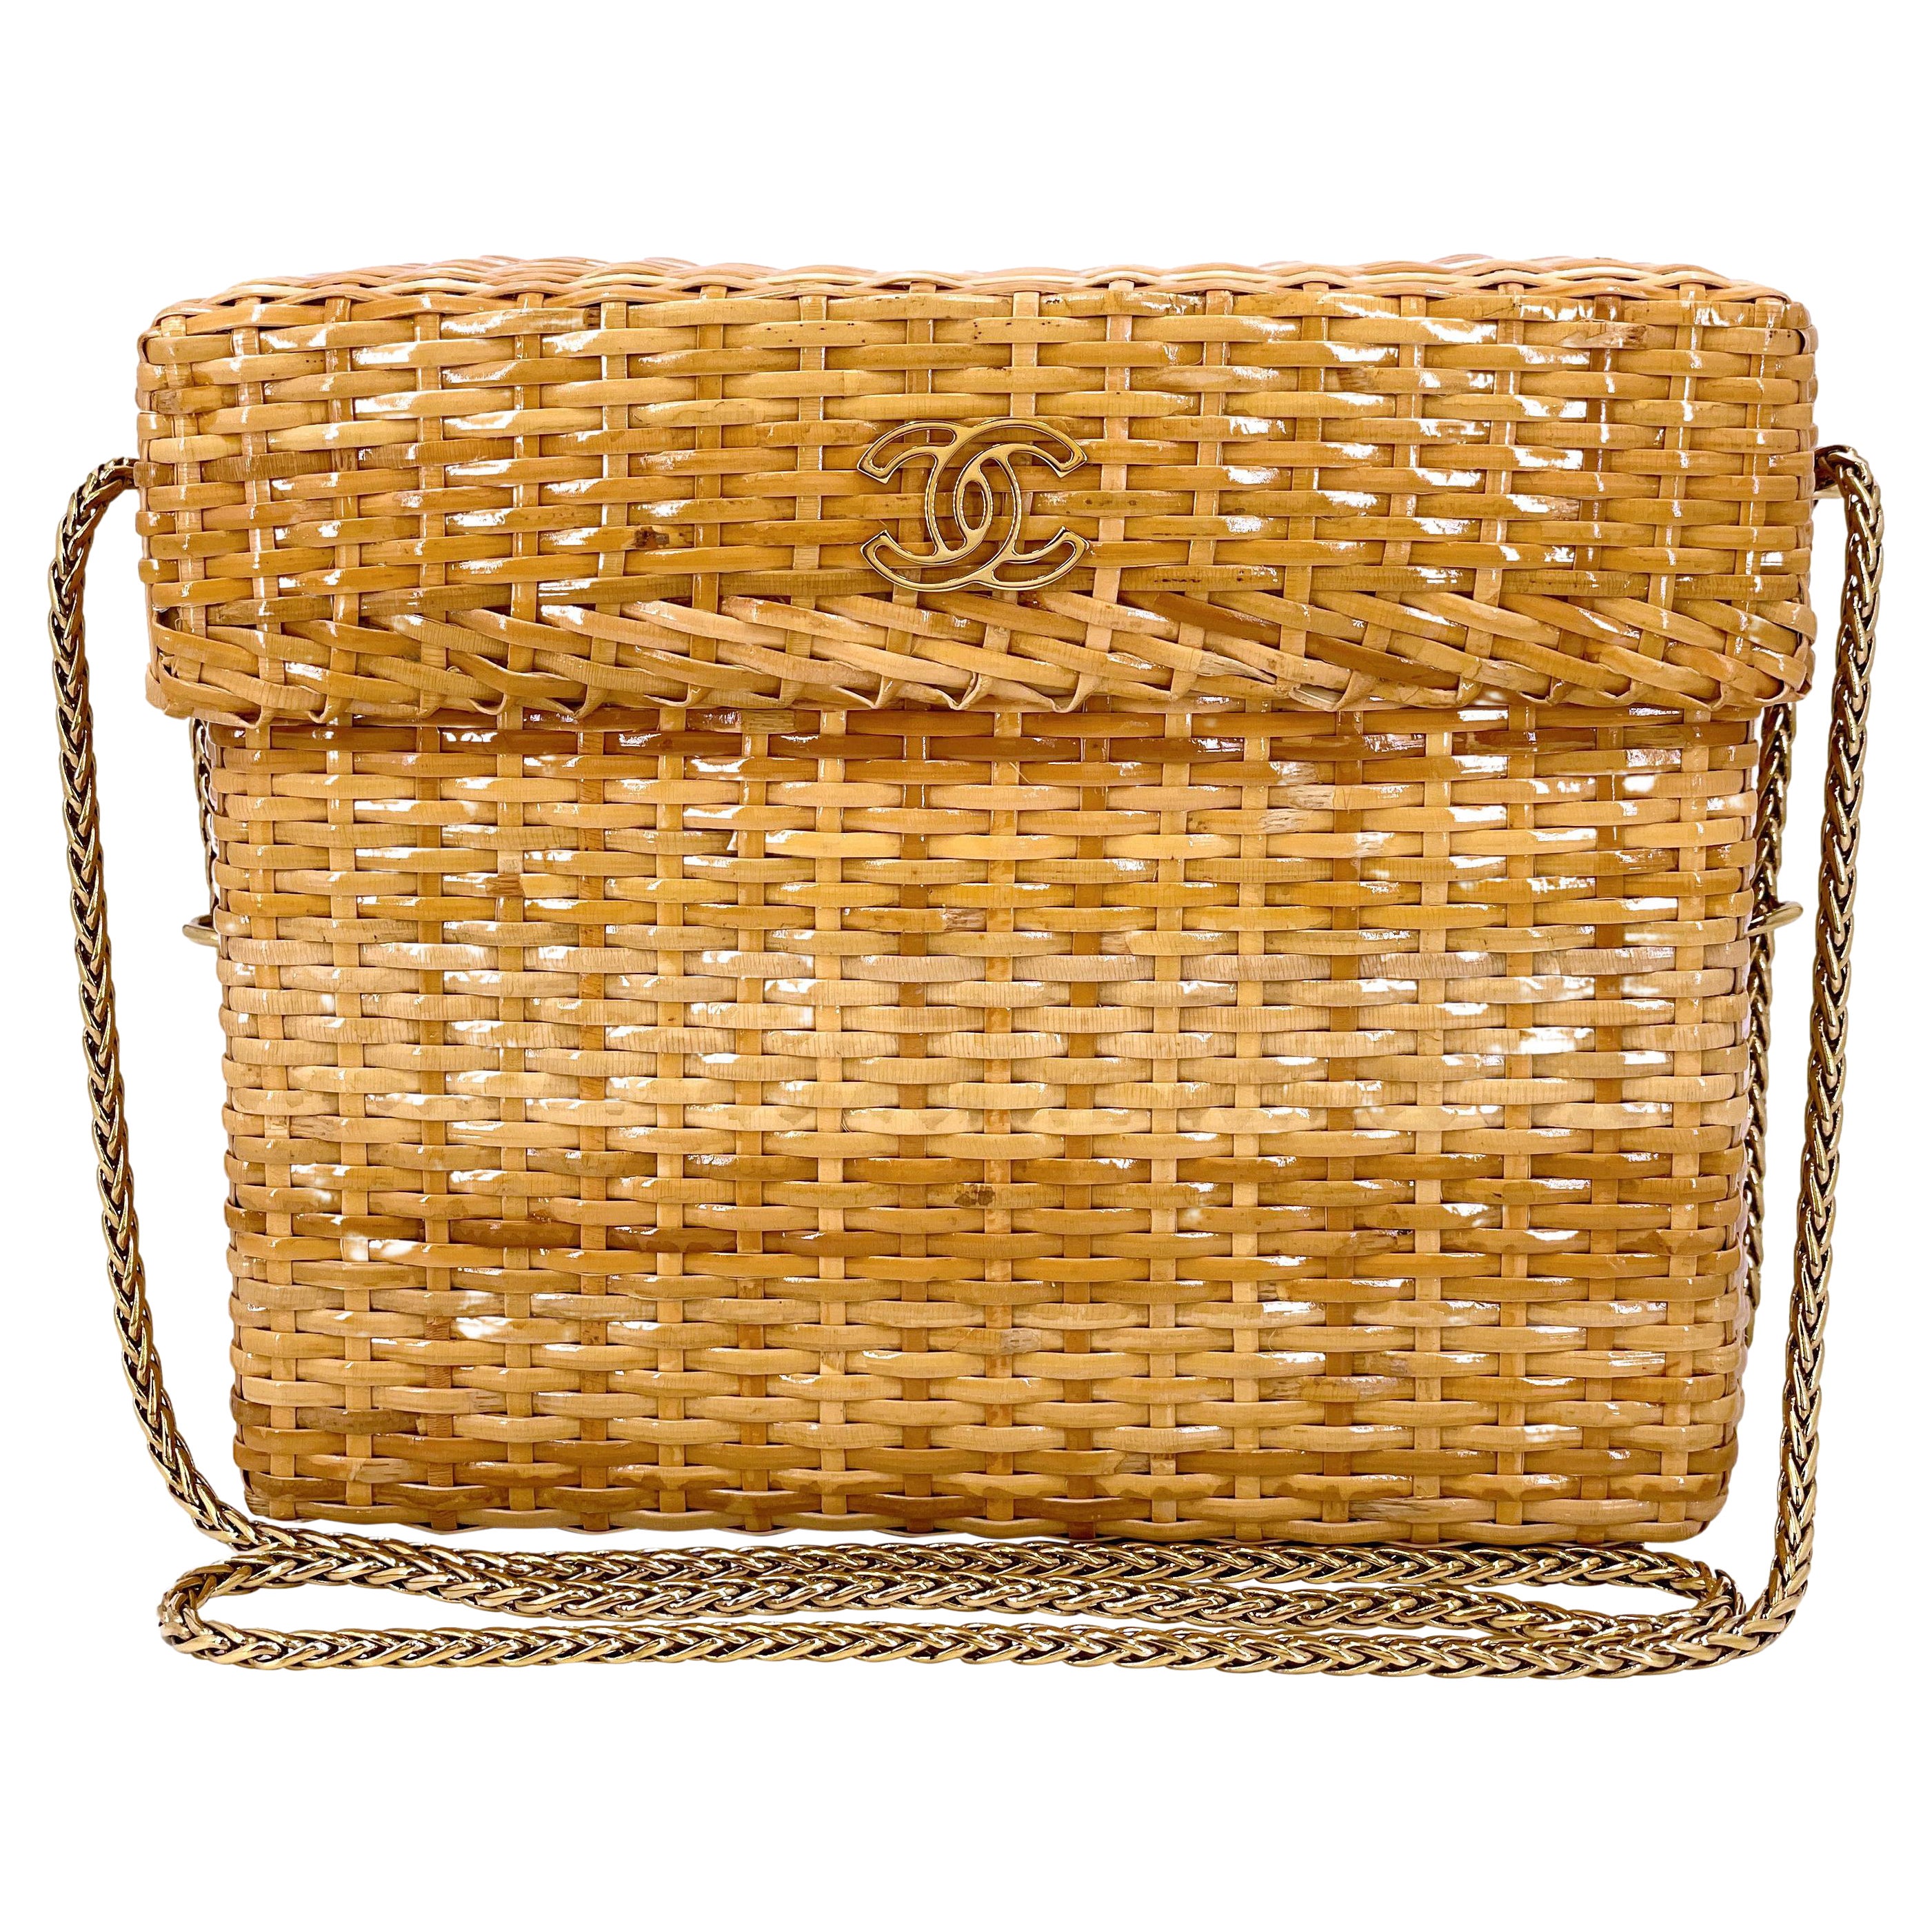 Chanel Vintage Wicker Mini Picnic Basket Rattan Bag w Chain 67399 For Sale